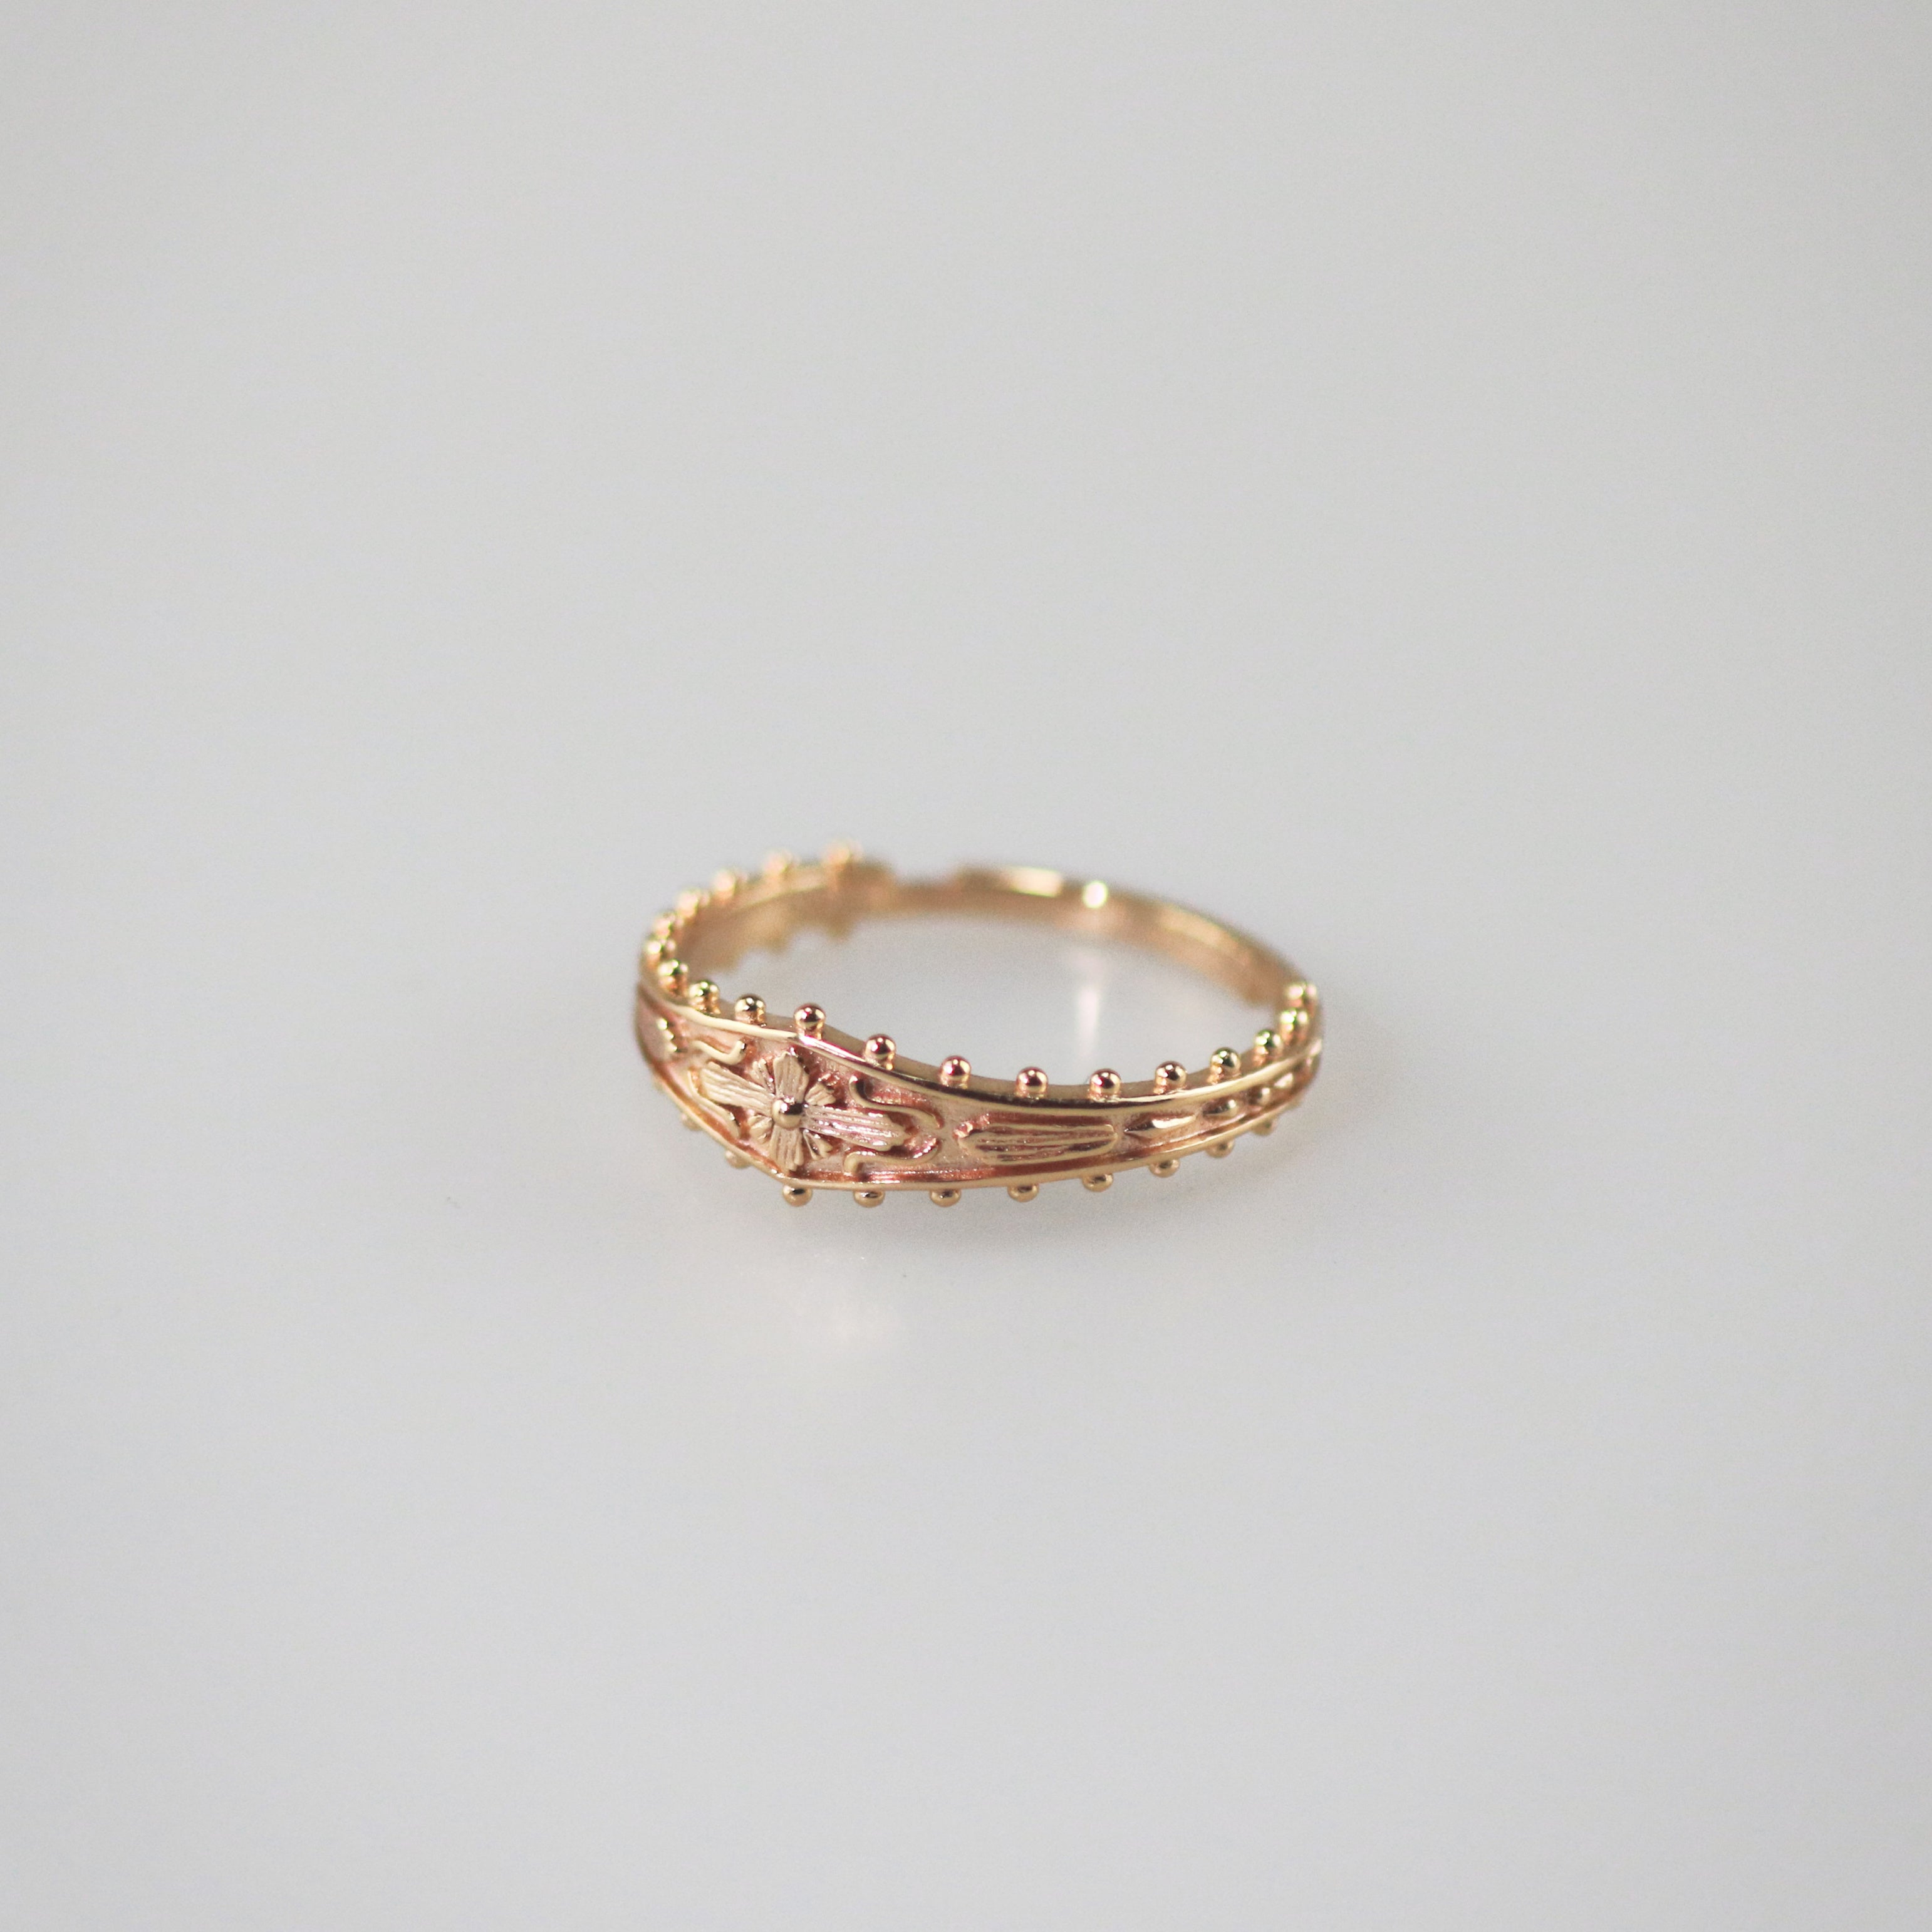 Meideya jewelry Victorian Engraved Ring Adjustable gold